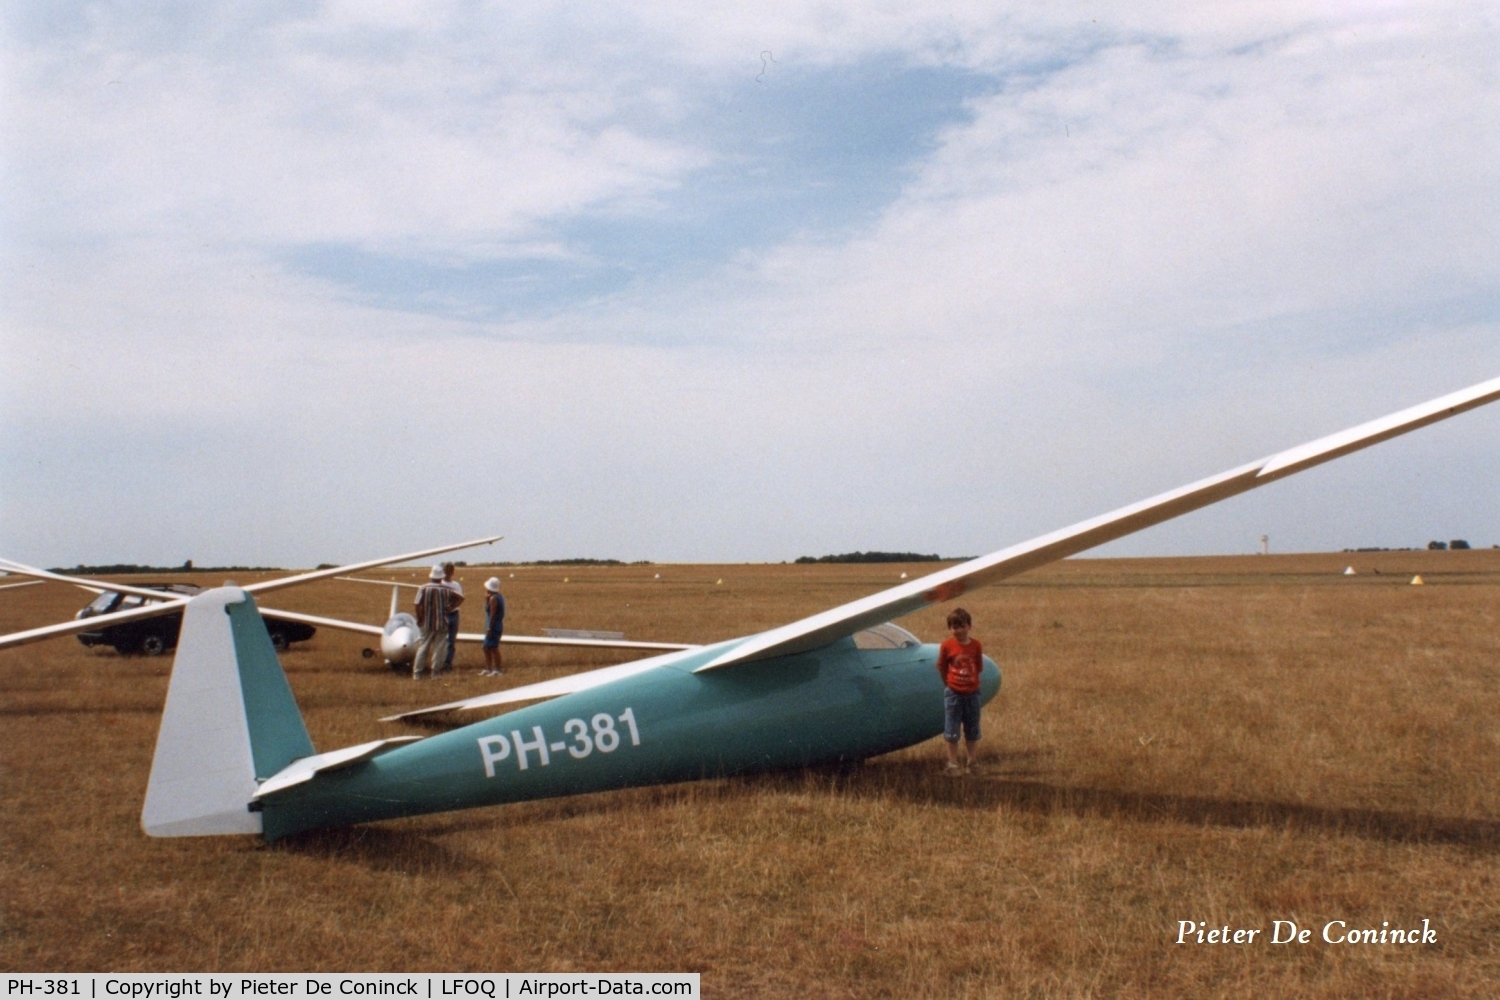 PH-381, Schleicher Ka-6CR Rhonsegler C/N 6511/A, PH-381 at Blois in early '90 s.